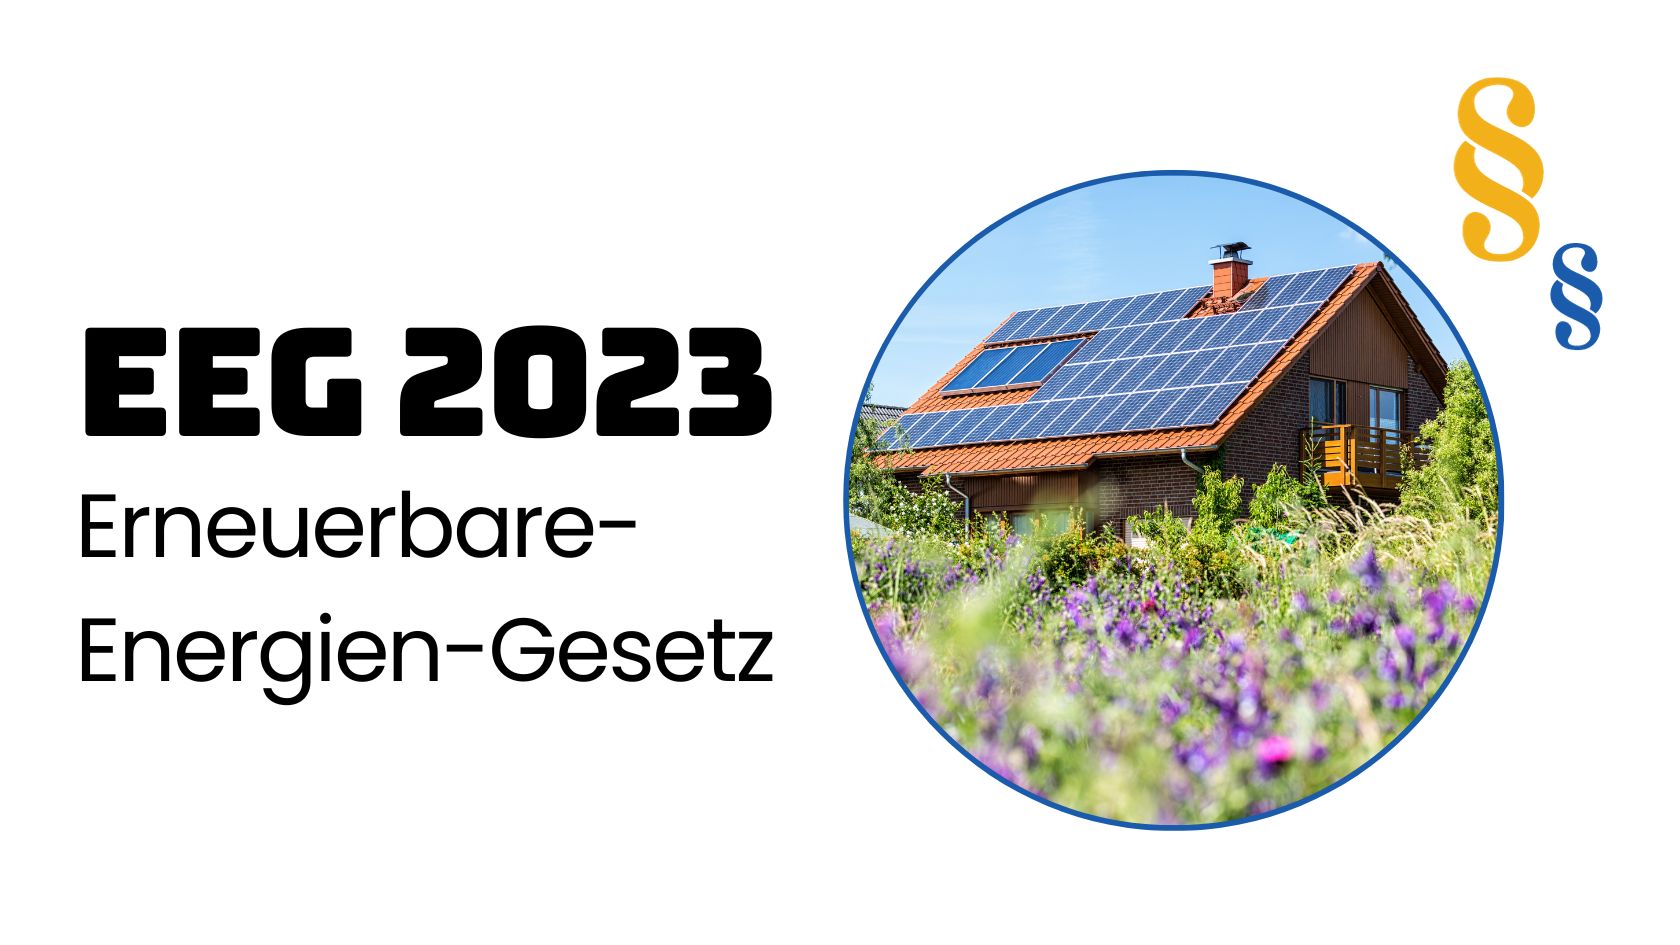 Erneuerbare-Energie-Gesetz 2023, EEG 2023